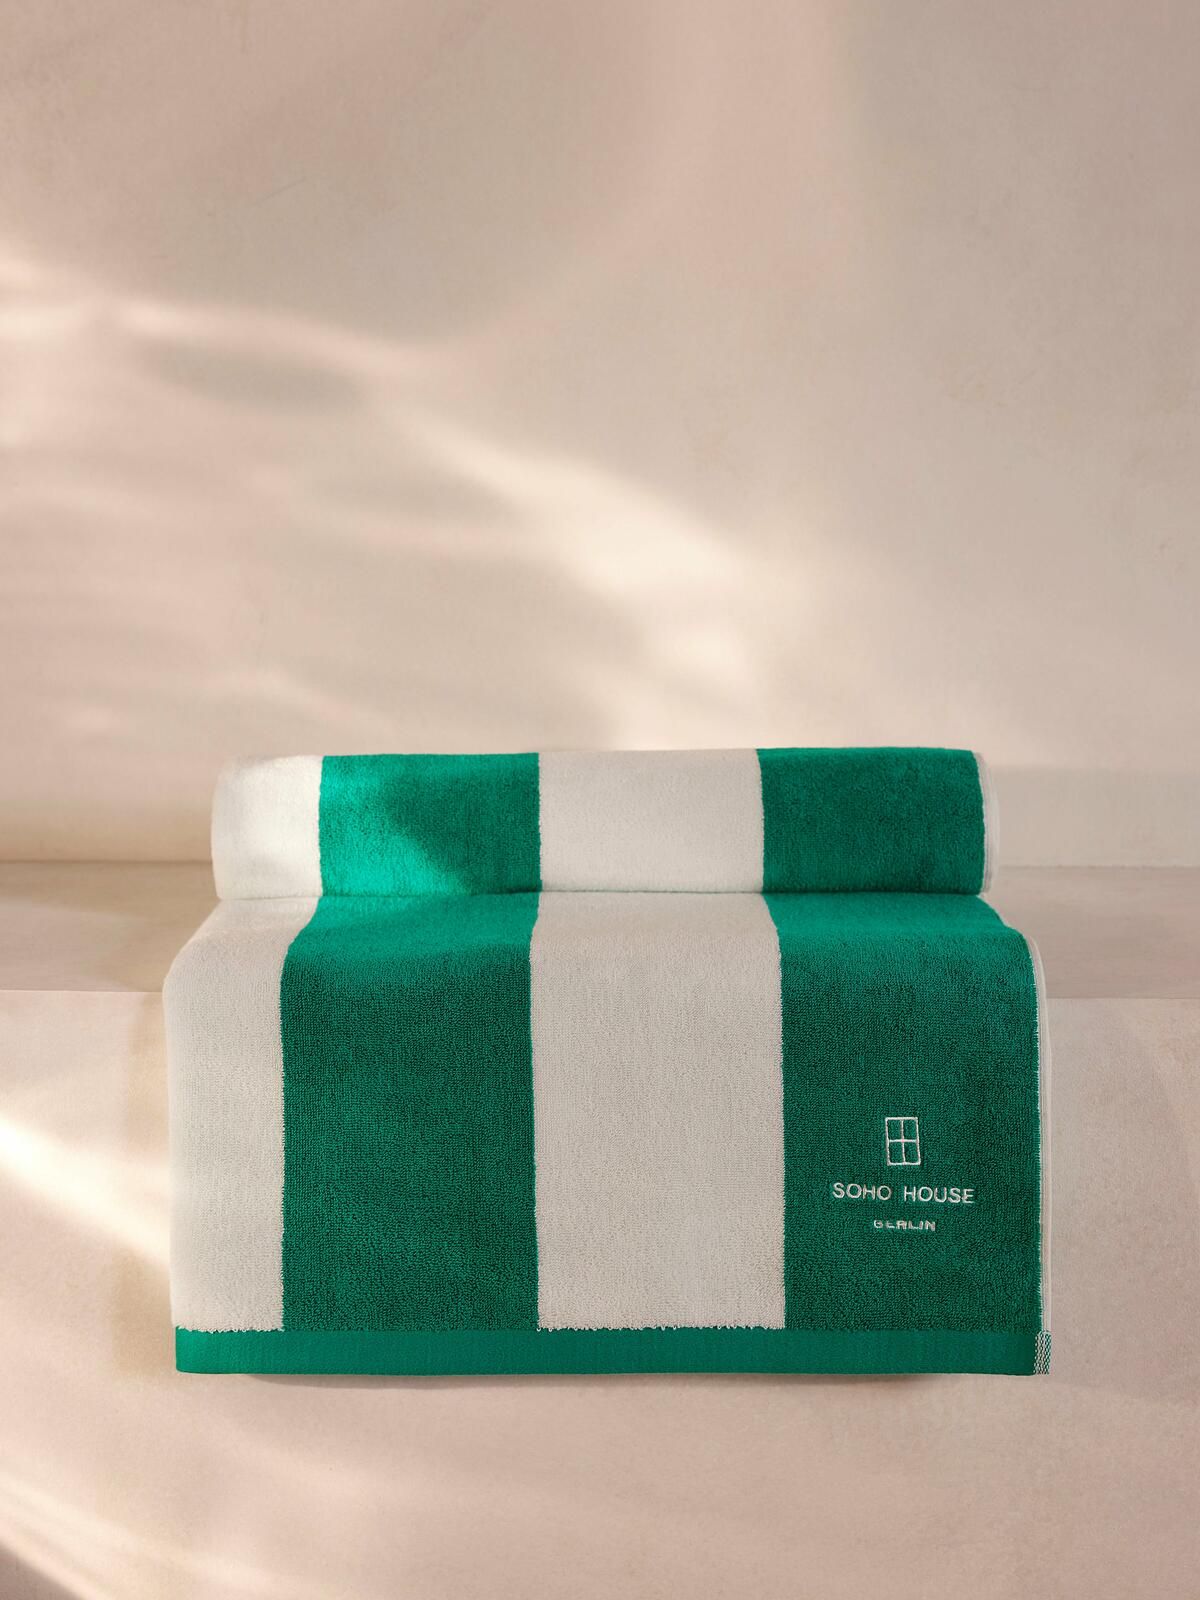 House Pool Towel, Berlin | Soho Home Ltd